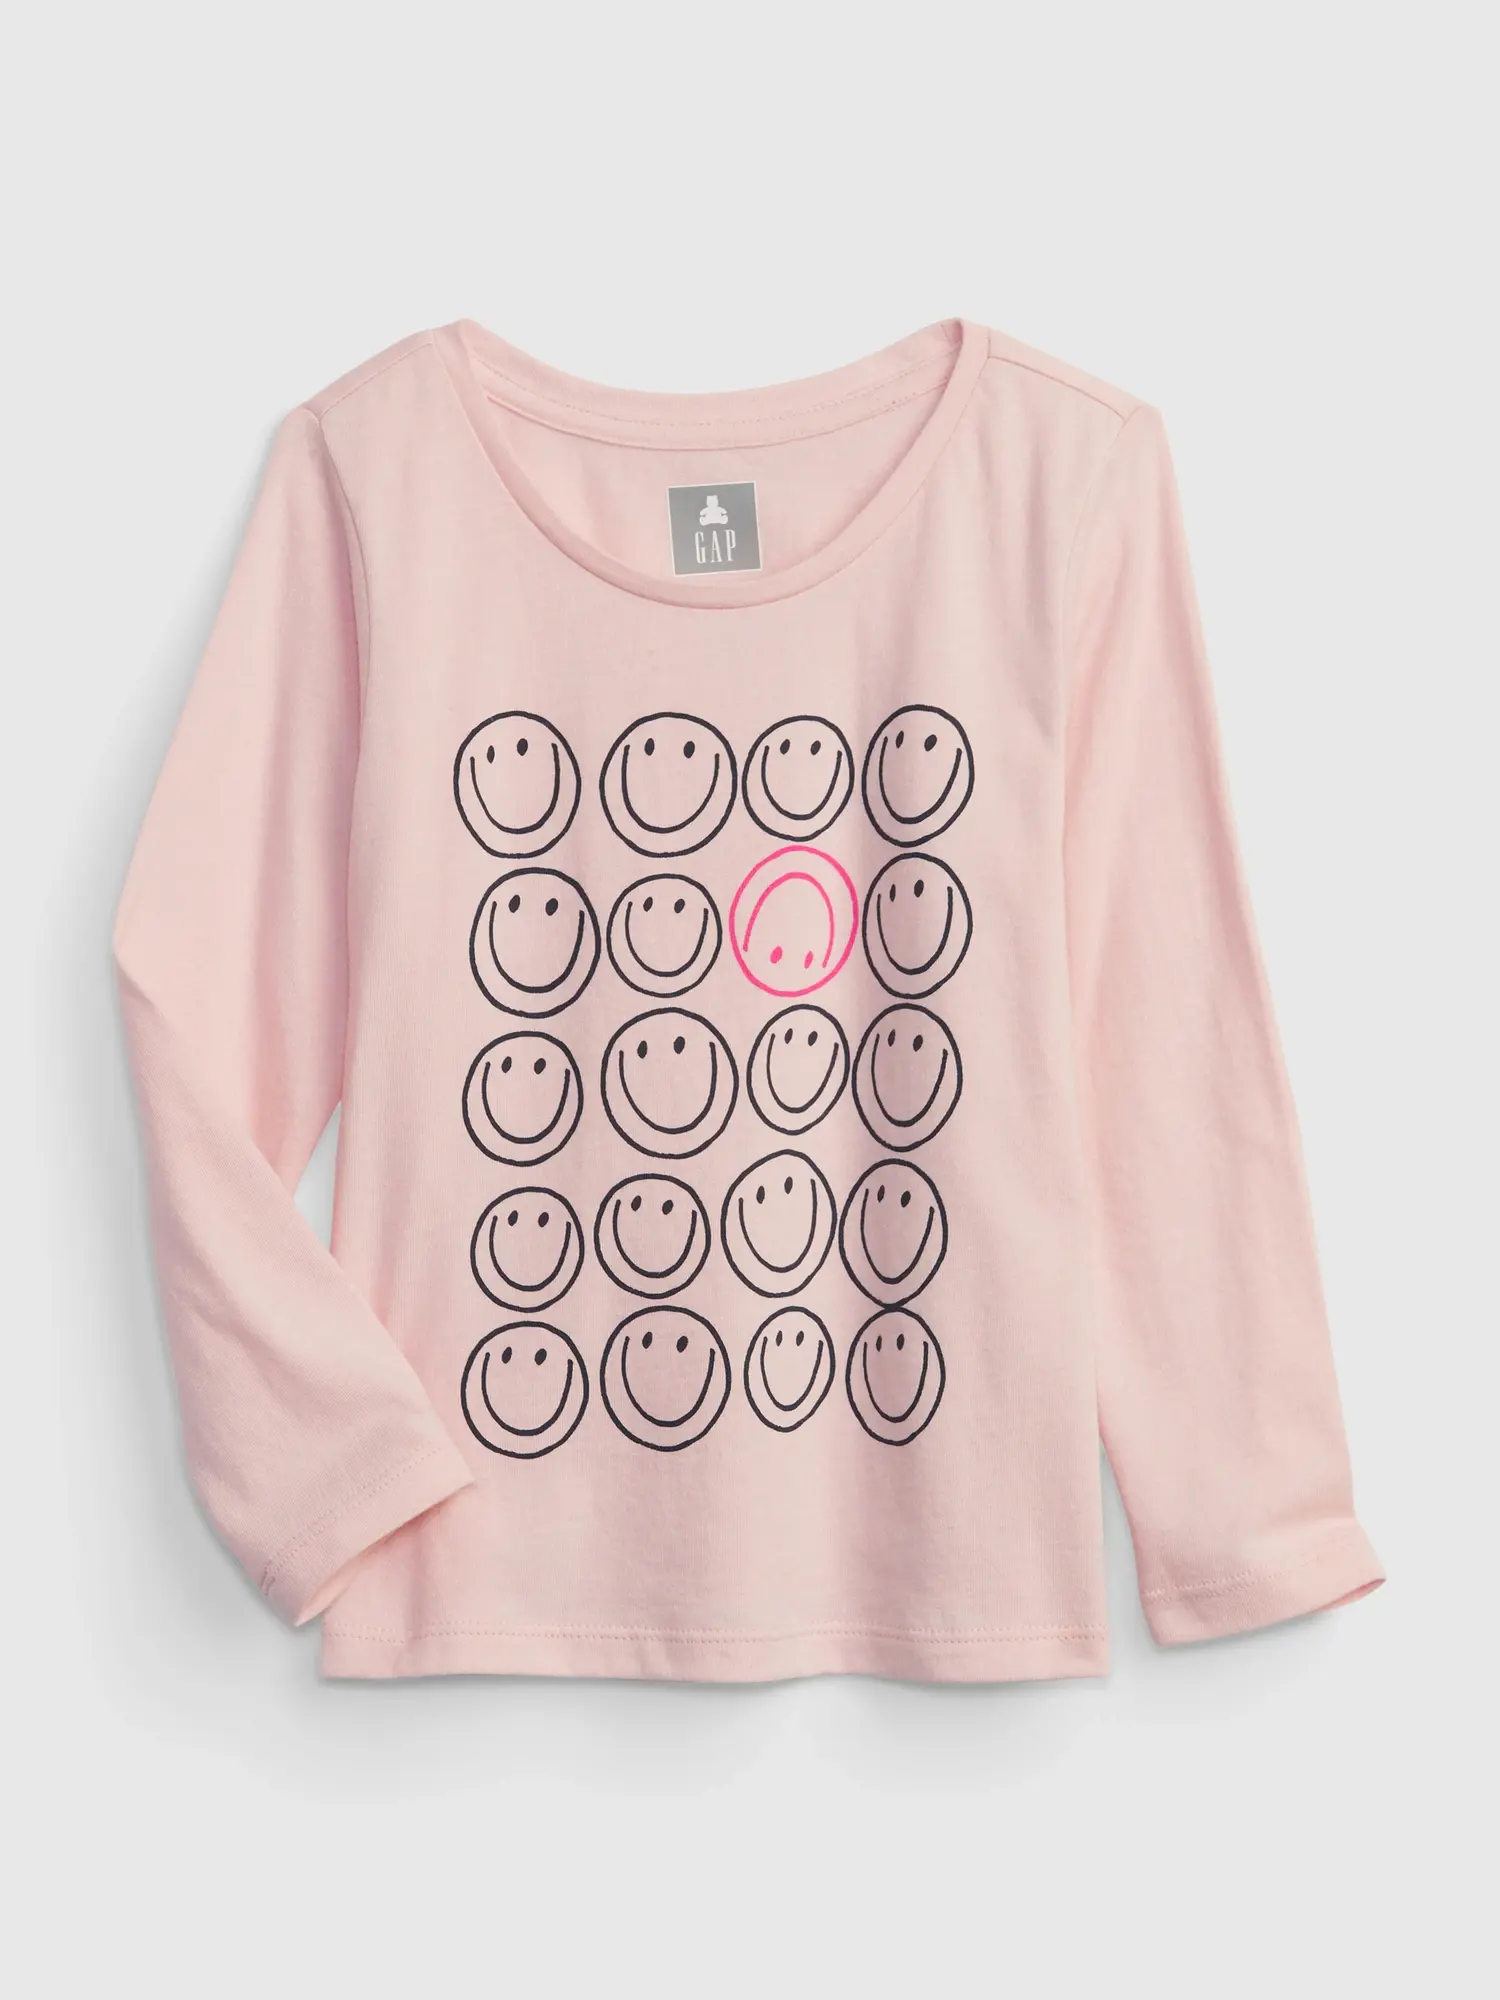 Gap Toddler 100% Organic Cotton Mix and Match Graphic T-Shirt pink. 1